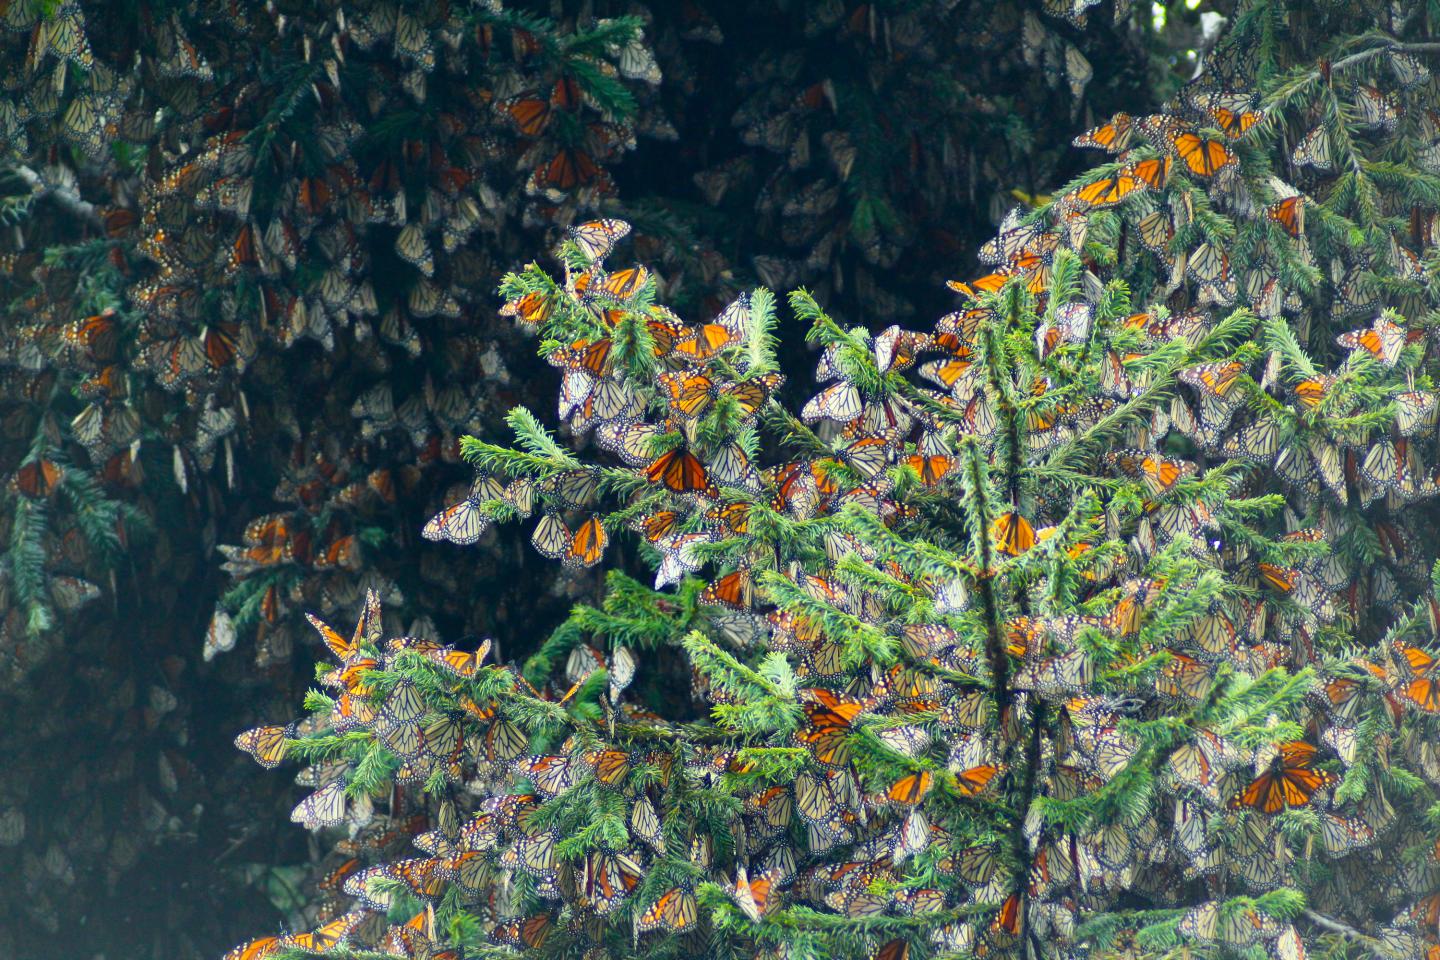 Monarchs in Mexico